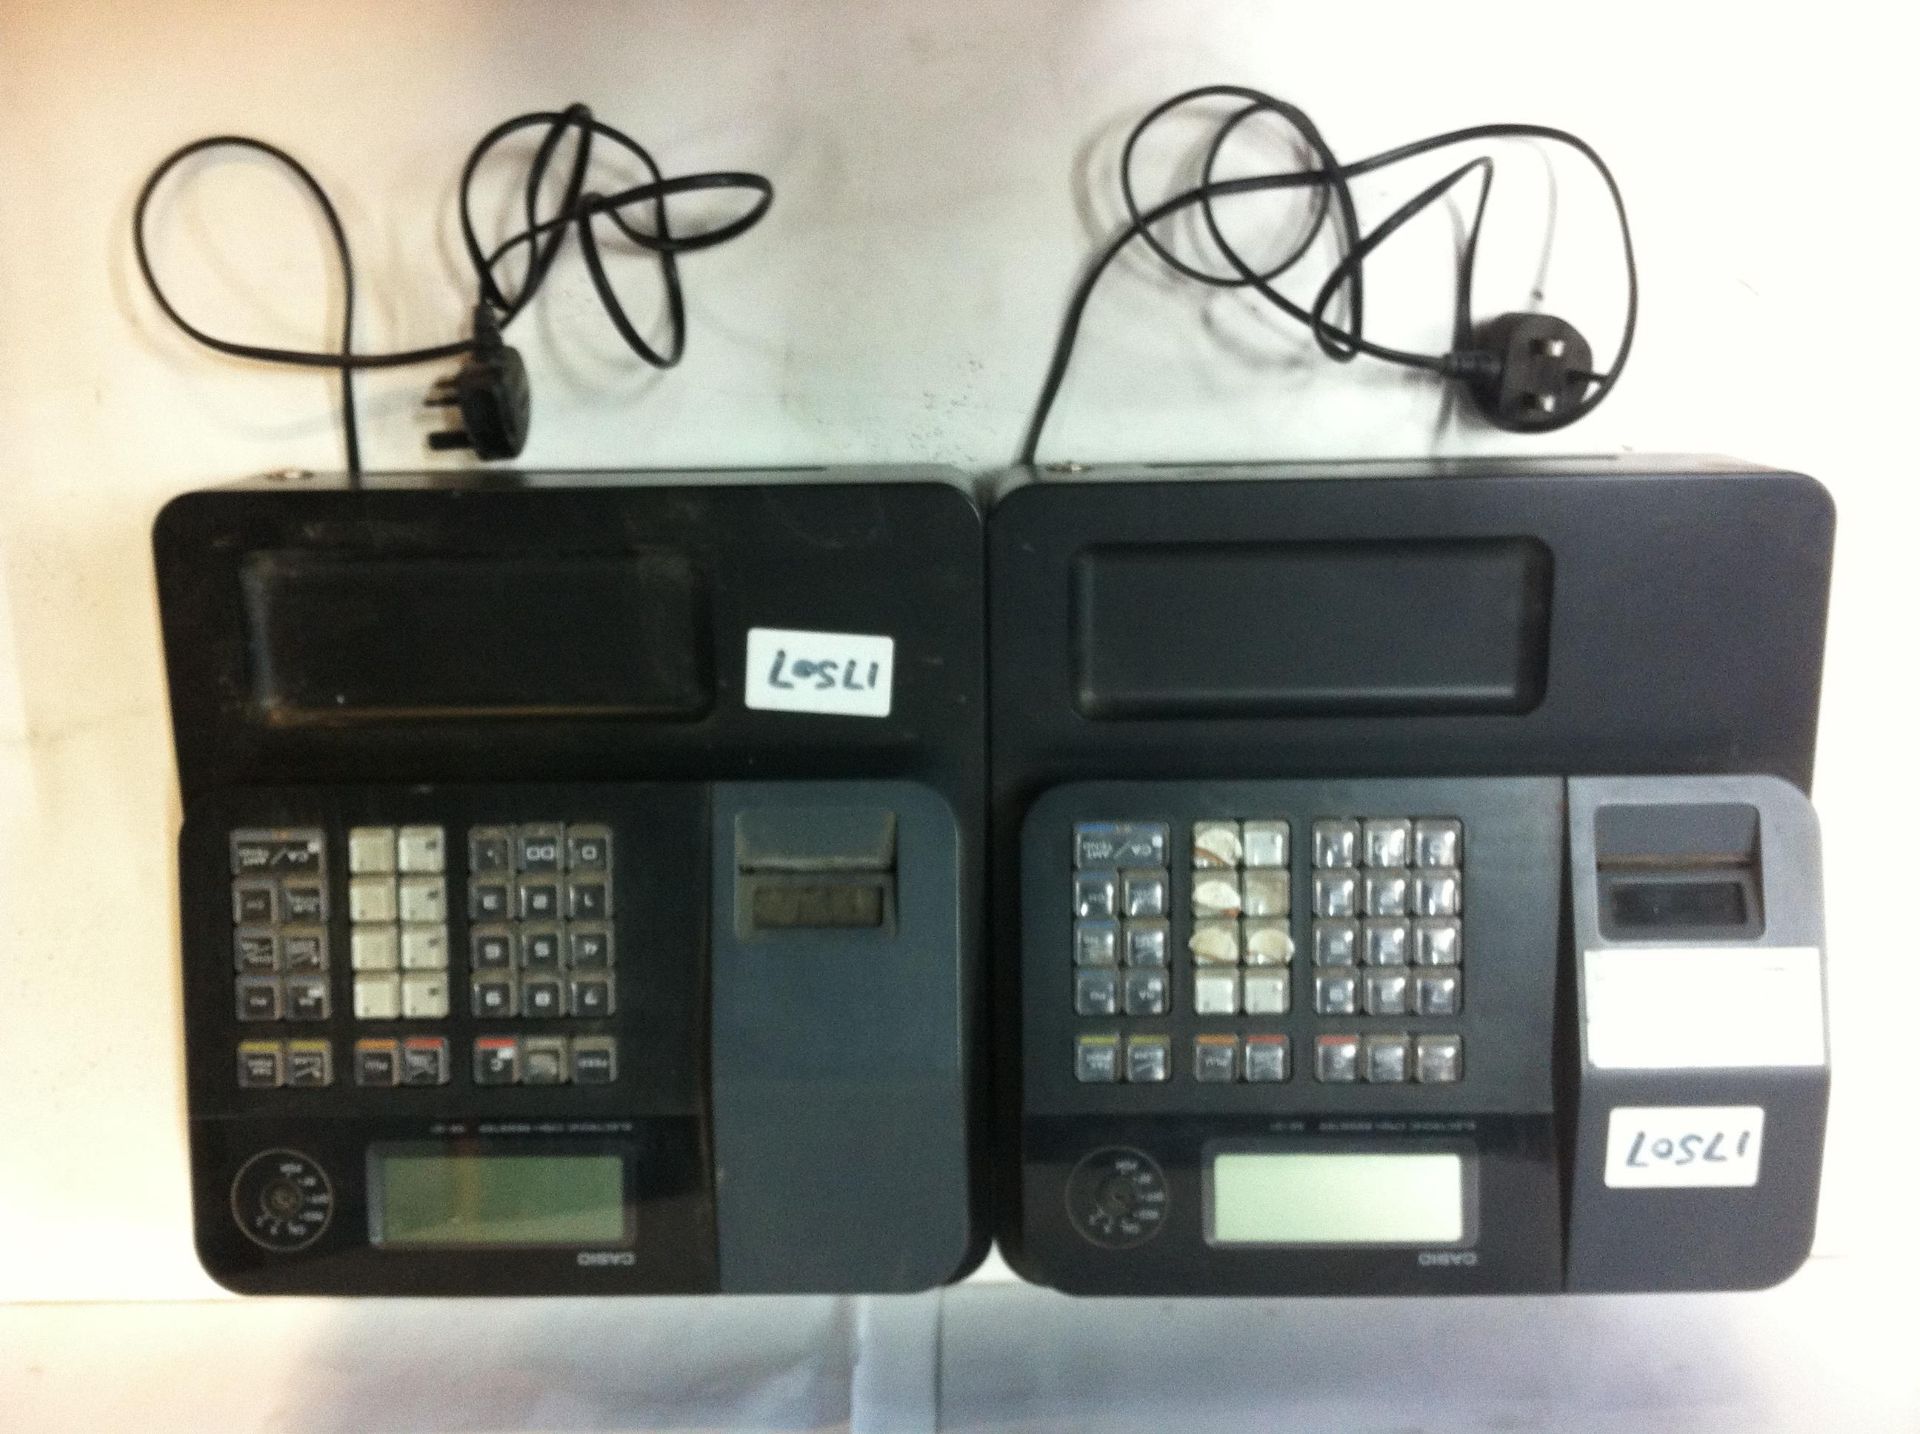 2 x Casio electronic cash registers